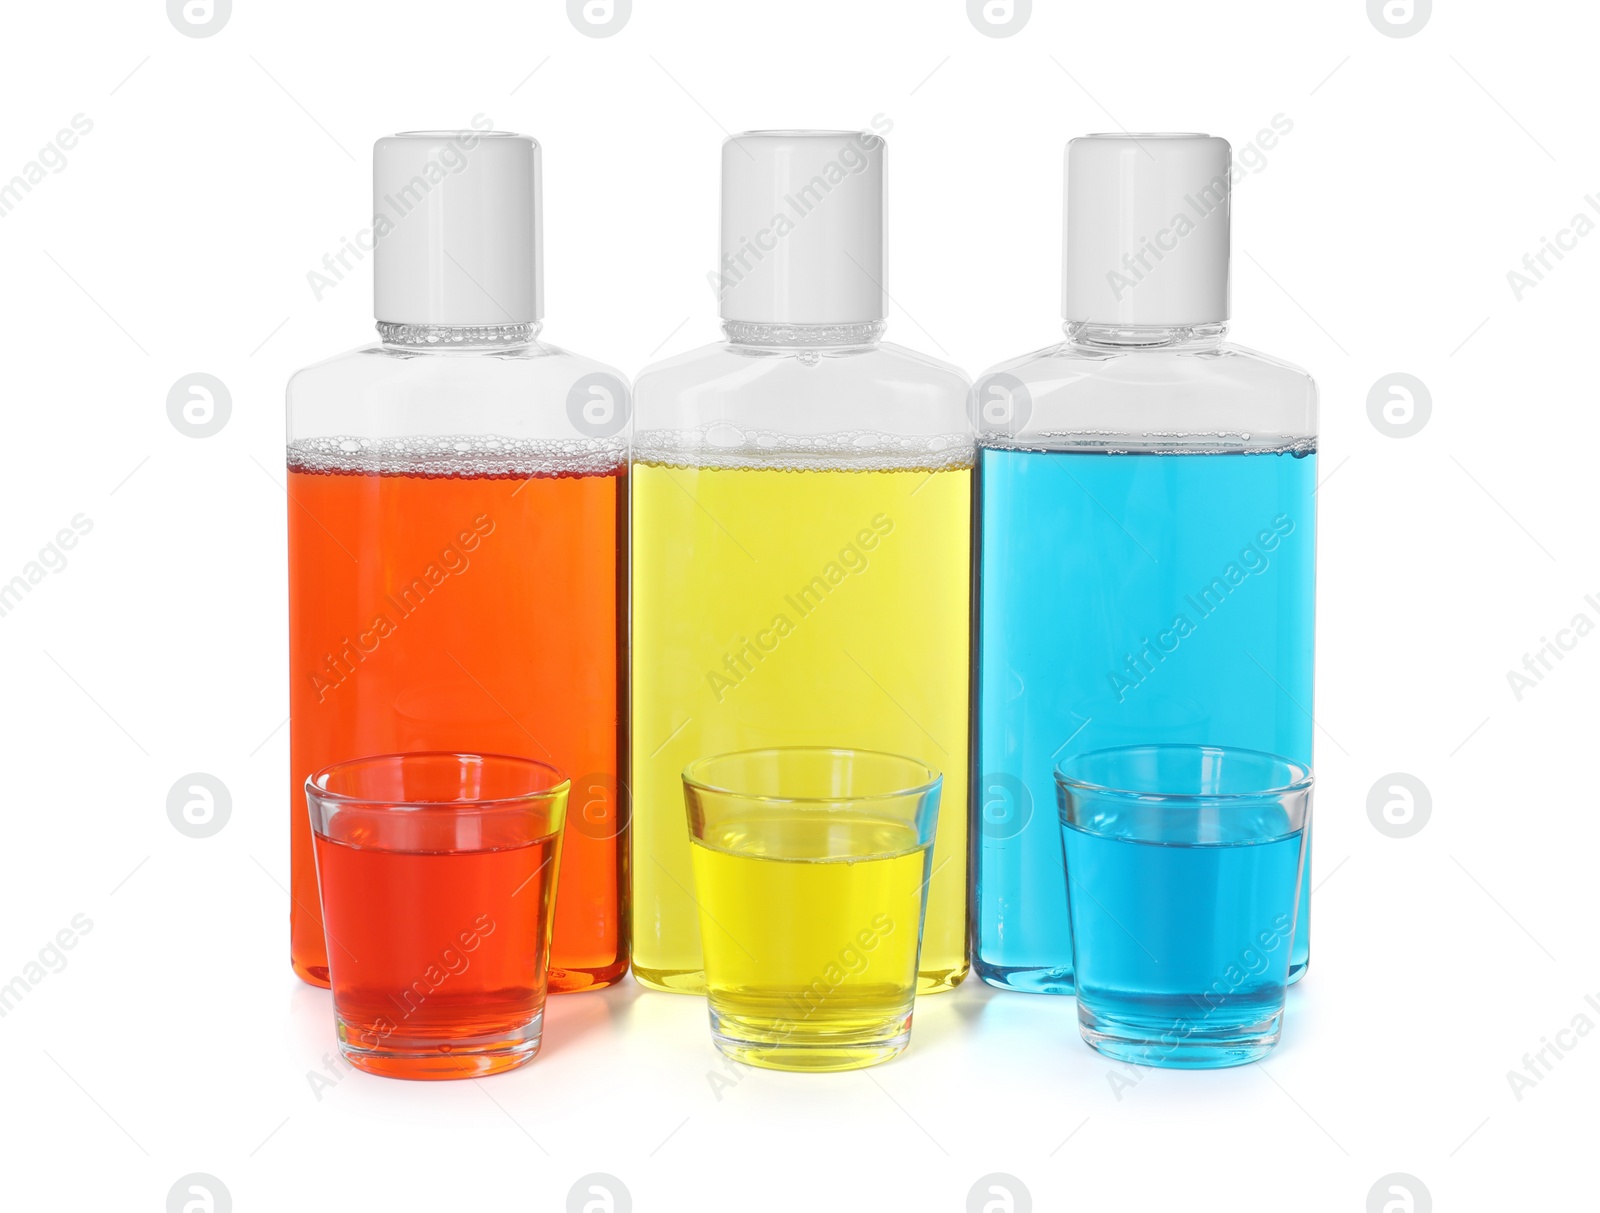 Photo of Bottles and glasses of mouthwash isolated on white